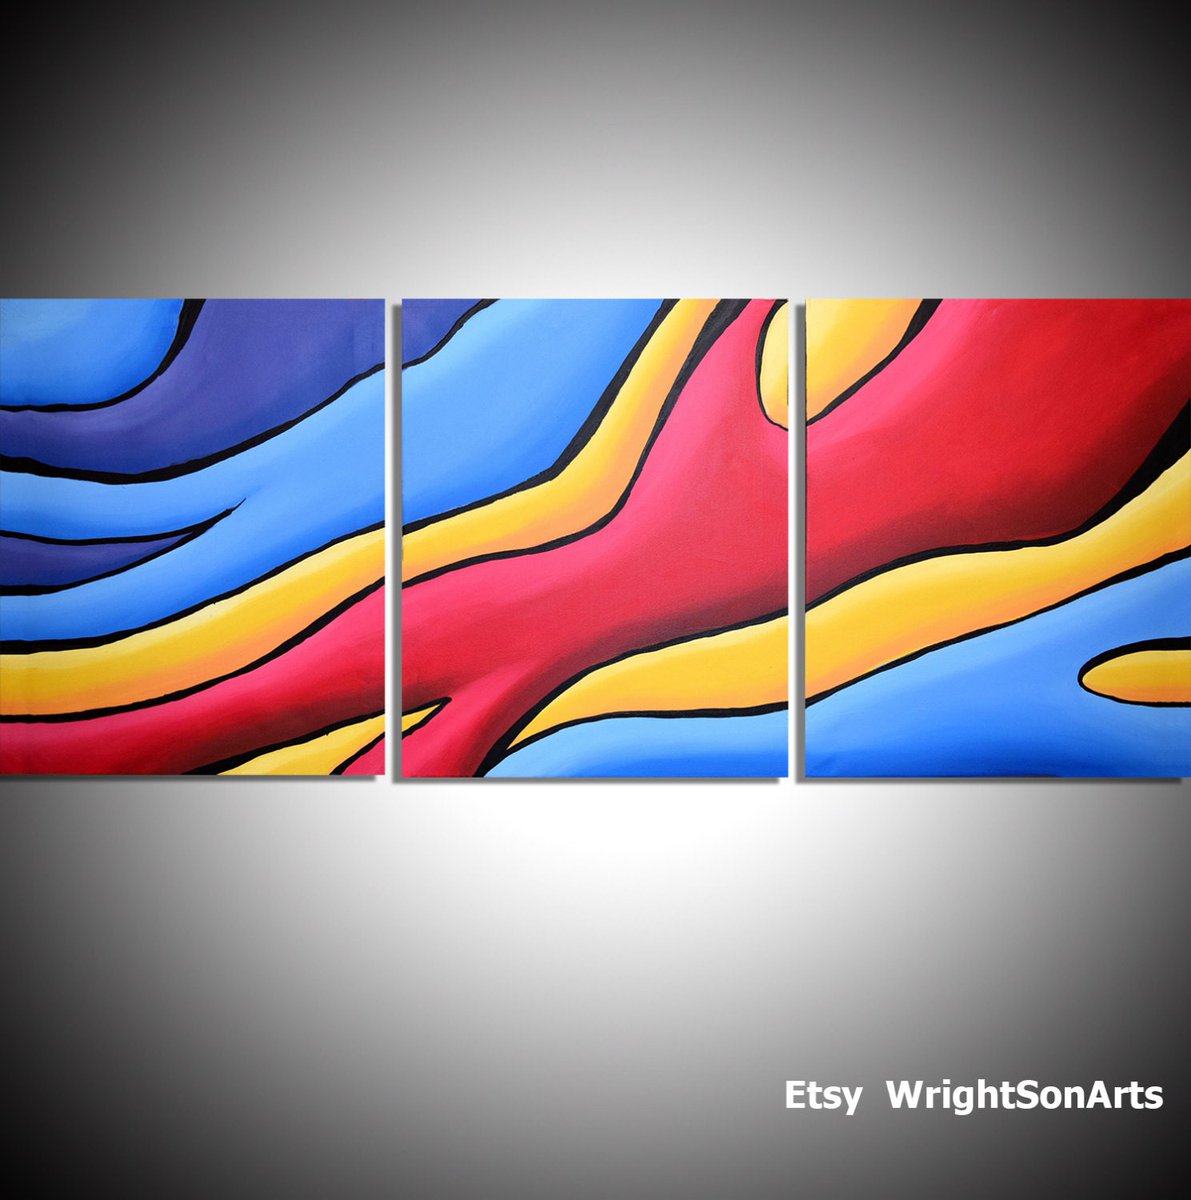 large wall canvas art triptych graffiti original 3 panel contemporary acrylic abstract modern three oversized tuppu.net/bde9b5de #acrylic #wallart #Etsy #MyNewTag #canvas #painting #GraffitiArtCanvas